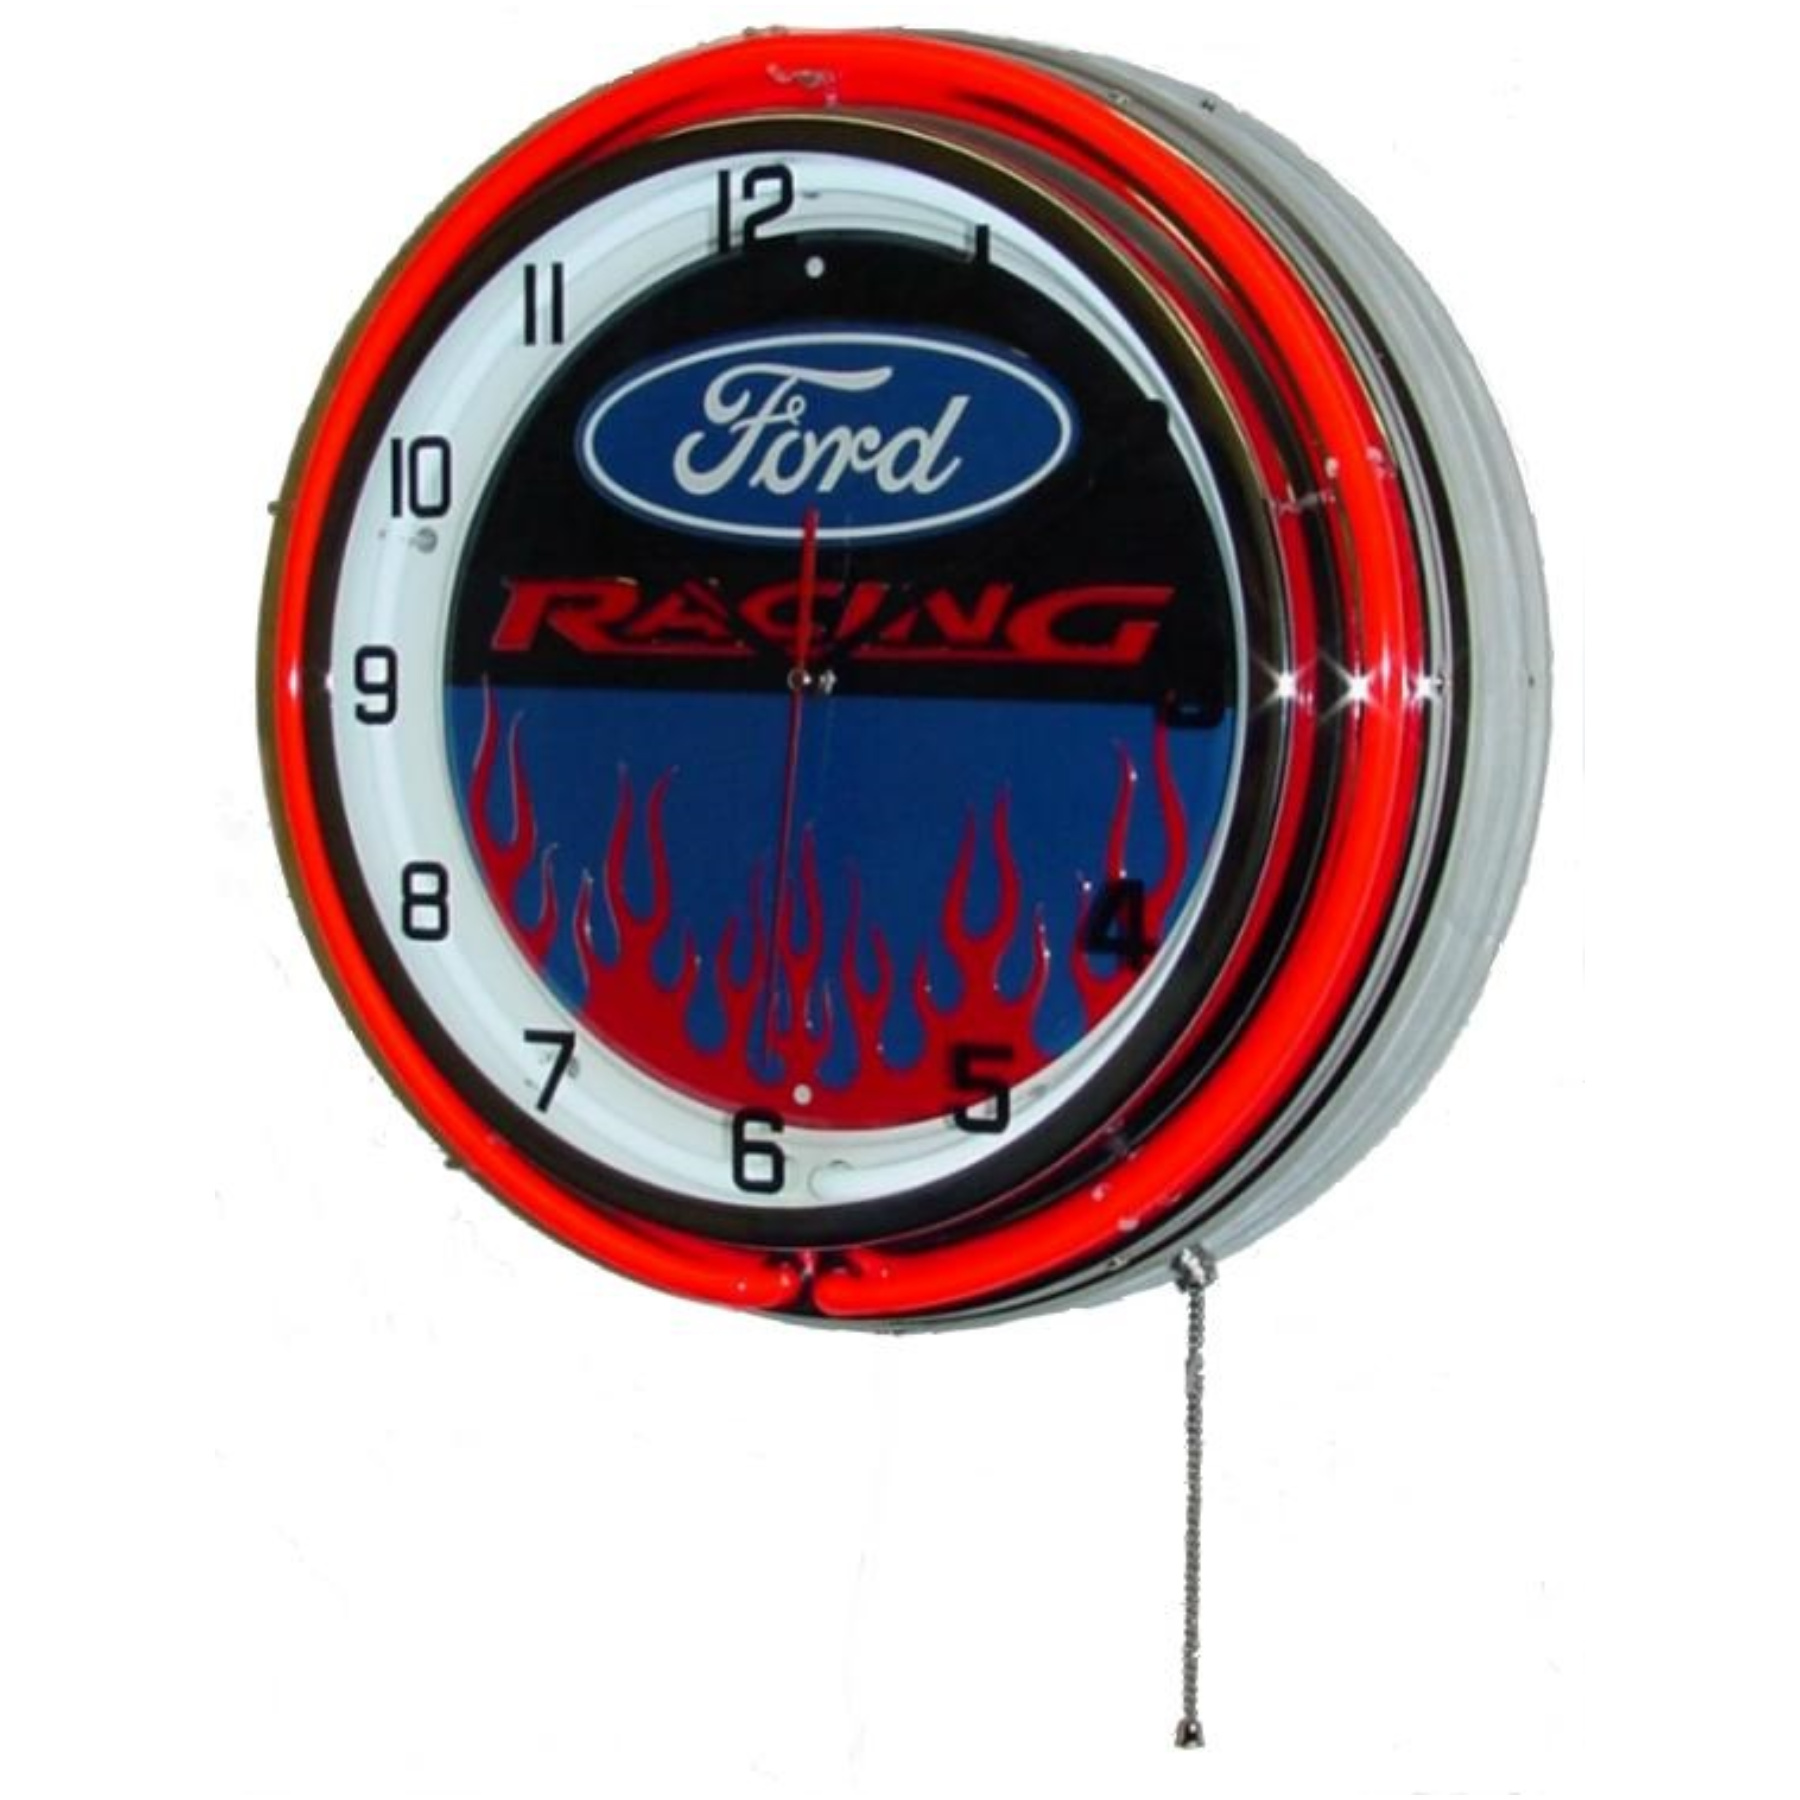 Ford racing wall clock #5